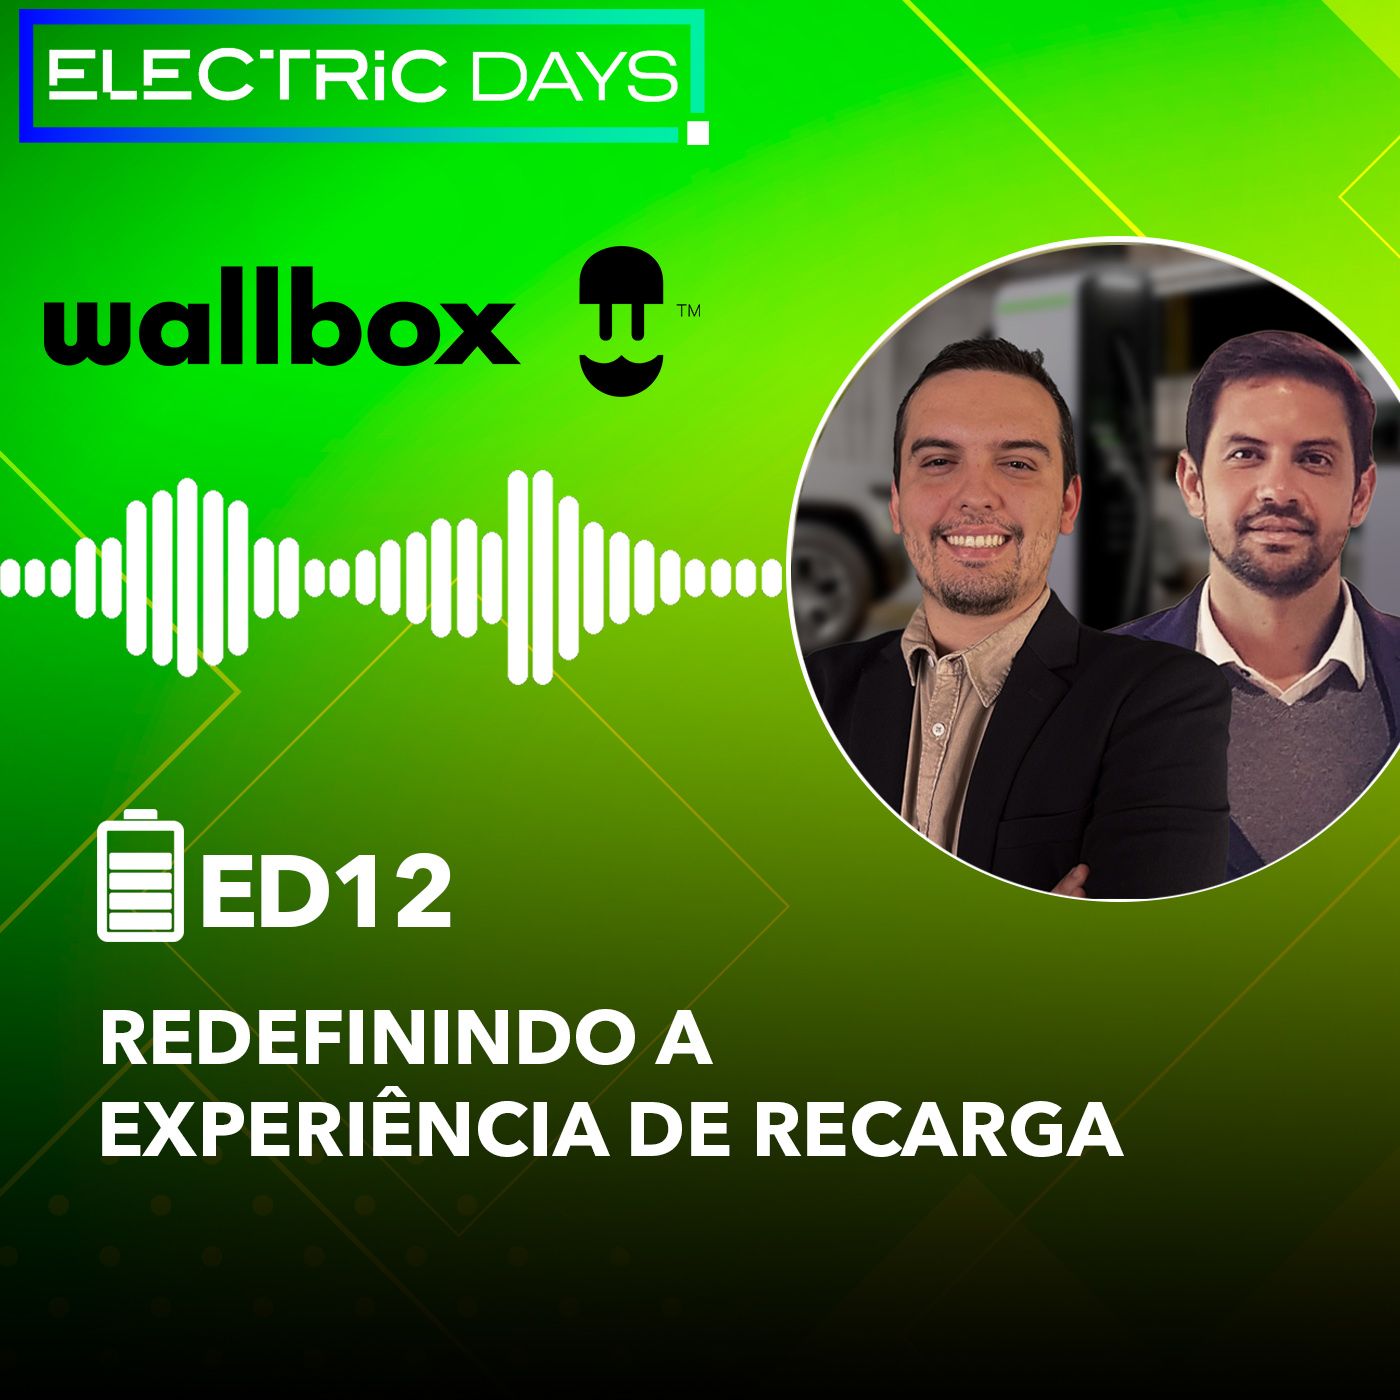 ElectricDays Podcast #11: Wallbox - Redefinindo a experiência de recarga de carros elétricos